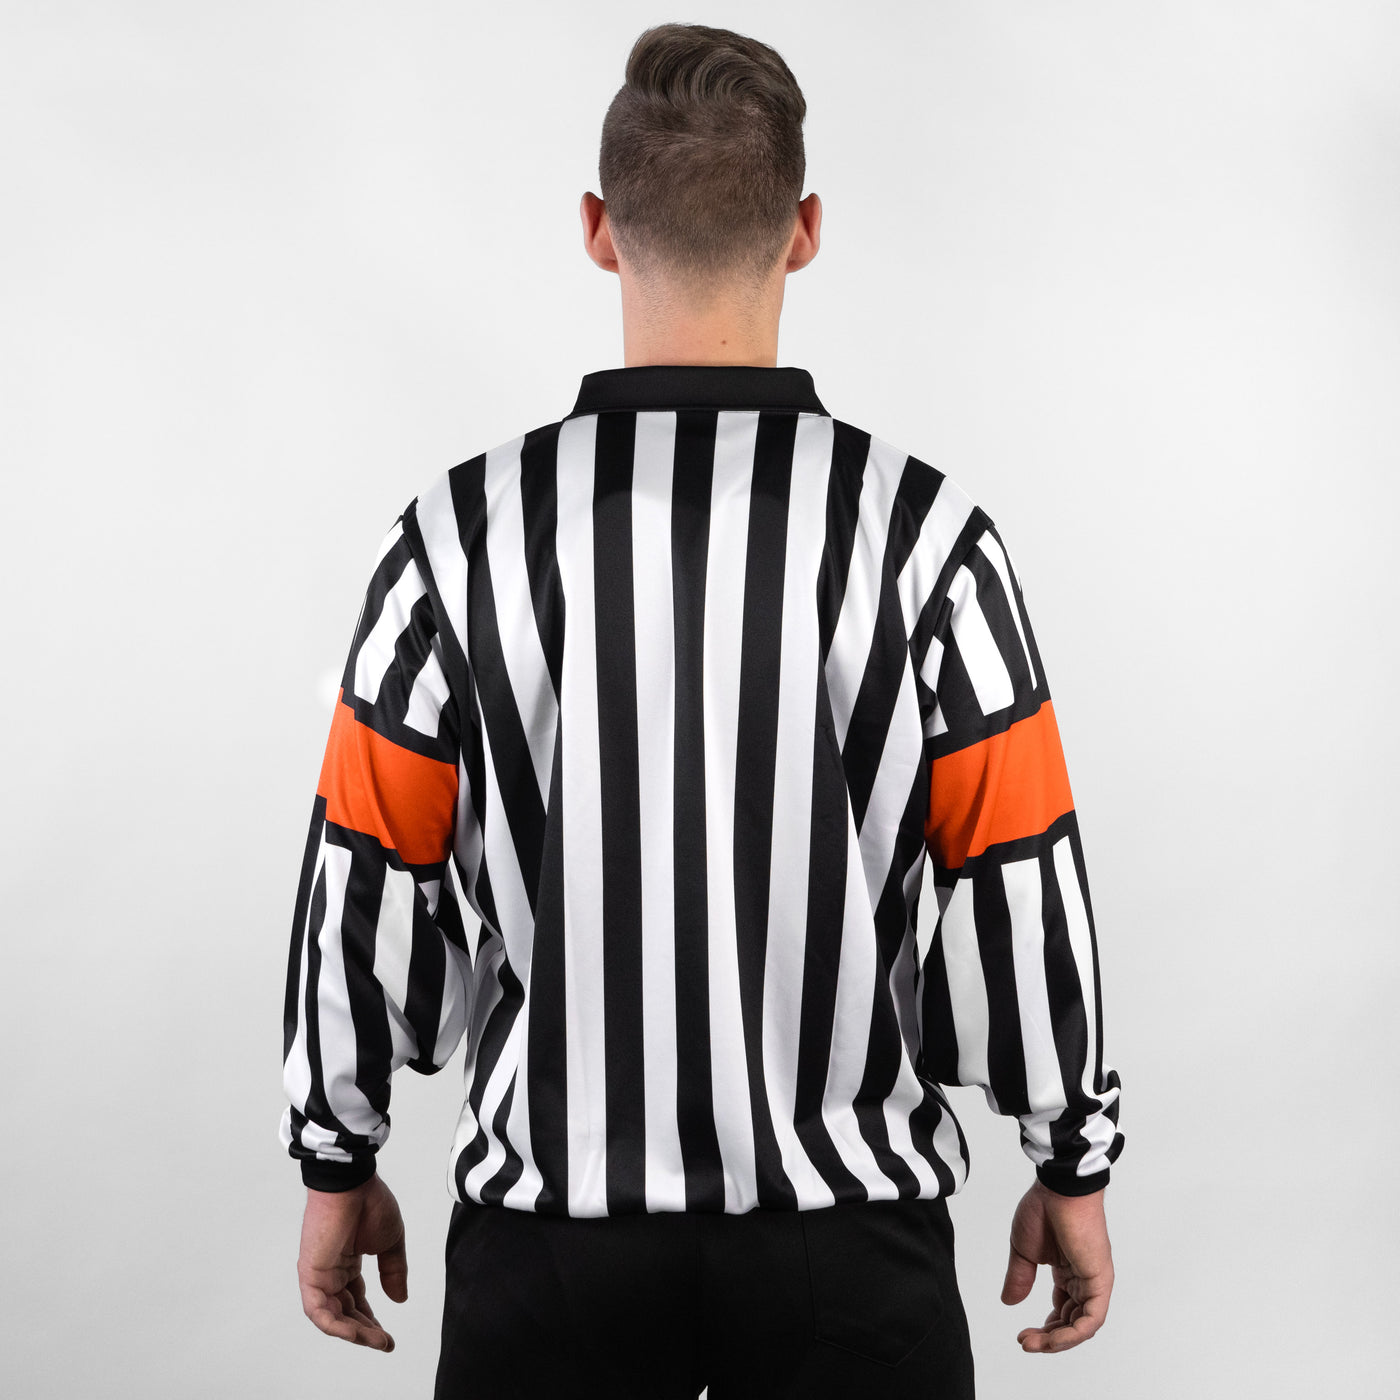 Zebrasclub ZR1 hockey referee jersey with sublimated orange arm bands back view